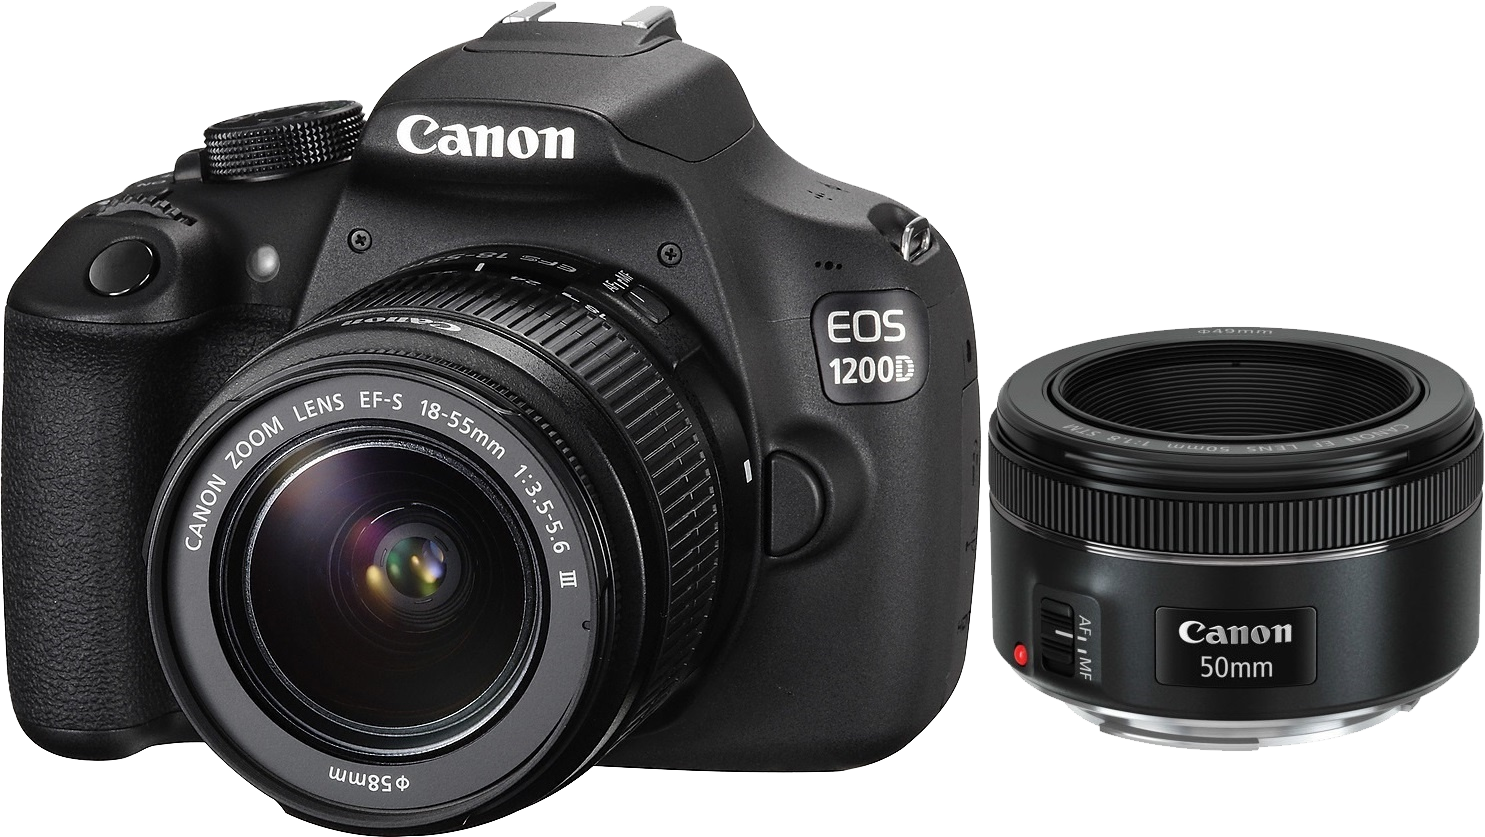 Canon ef s 18 55mm kit. Canon EOS 1200. Canon EOS 4000d Kit EF-S 18-55mm III. Canon EOS 1200d. Canon EOS 1200d Kit 18-55mm.